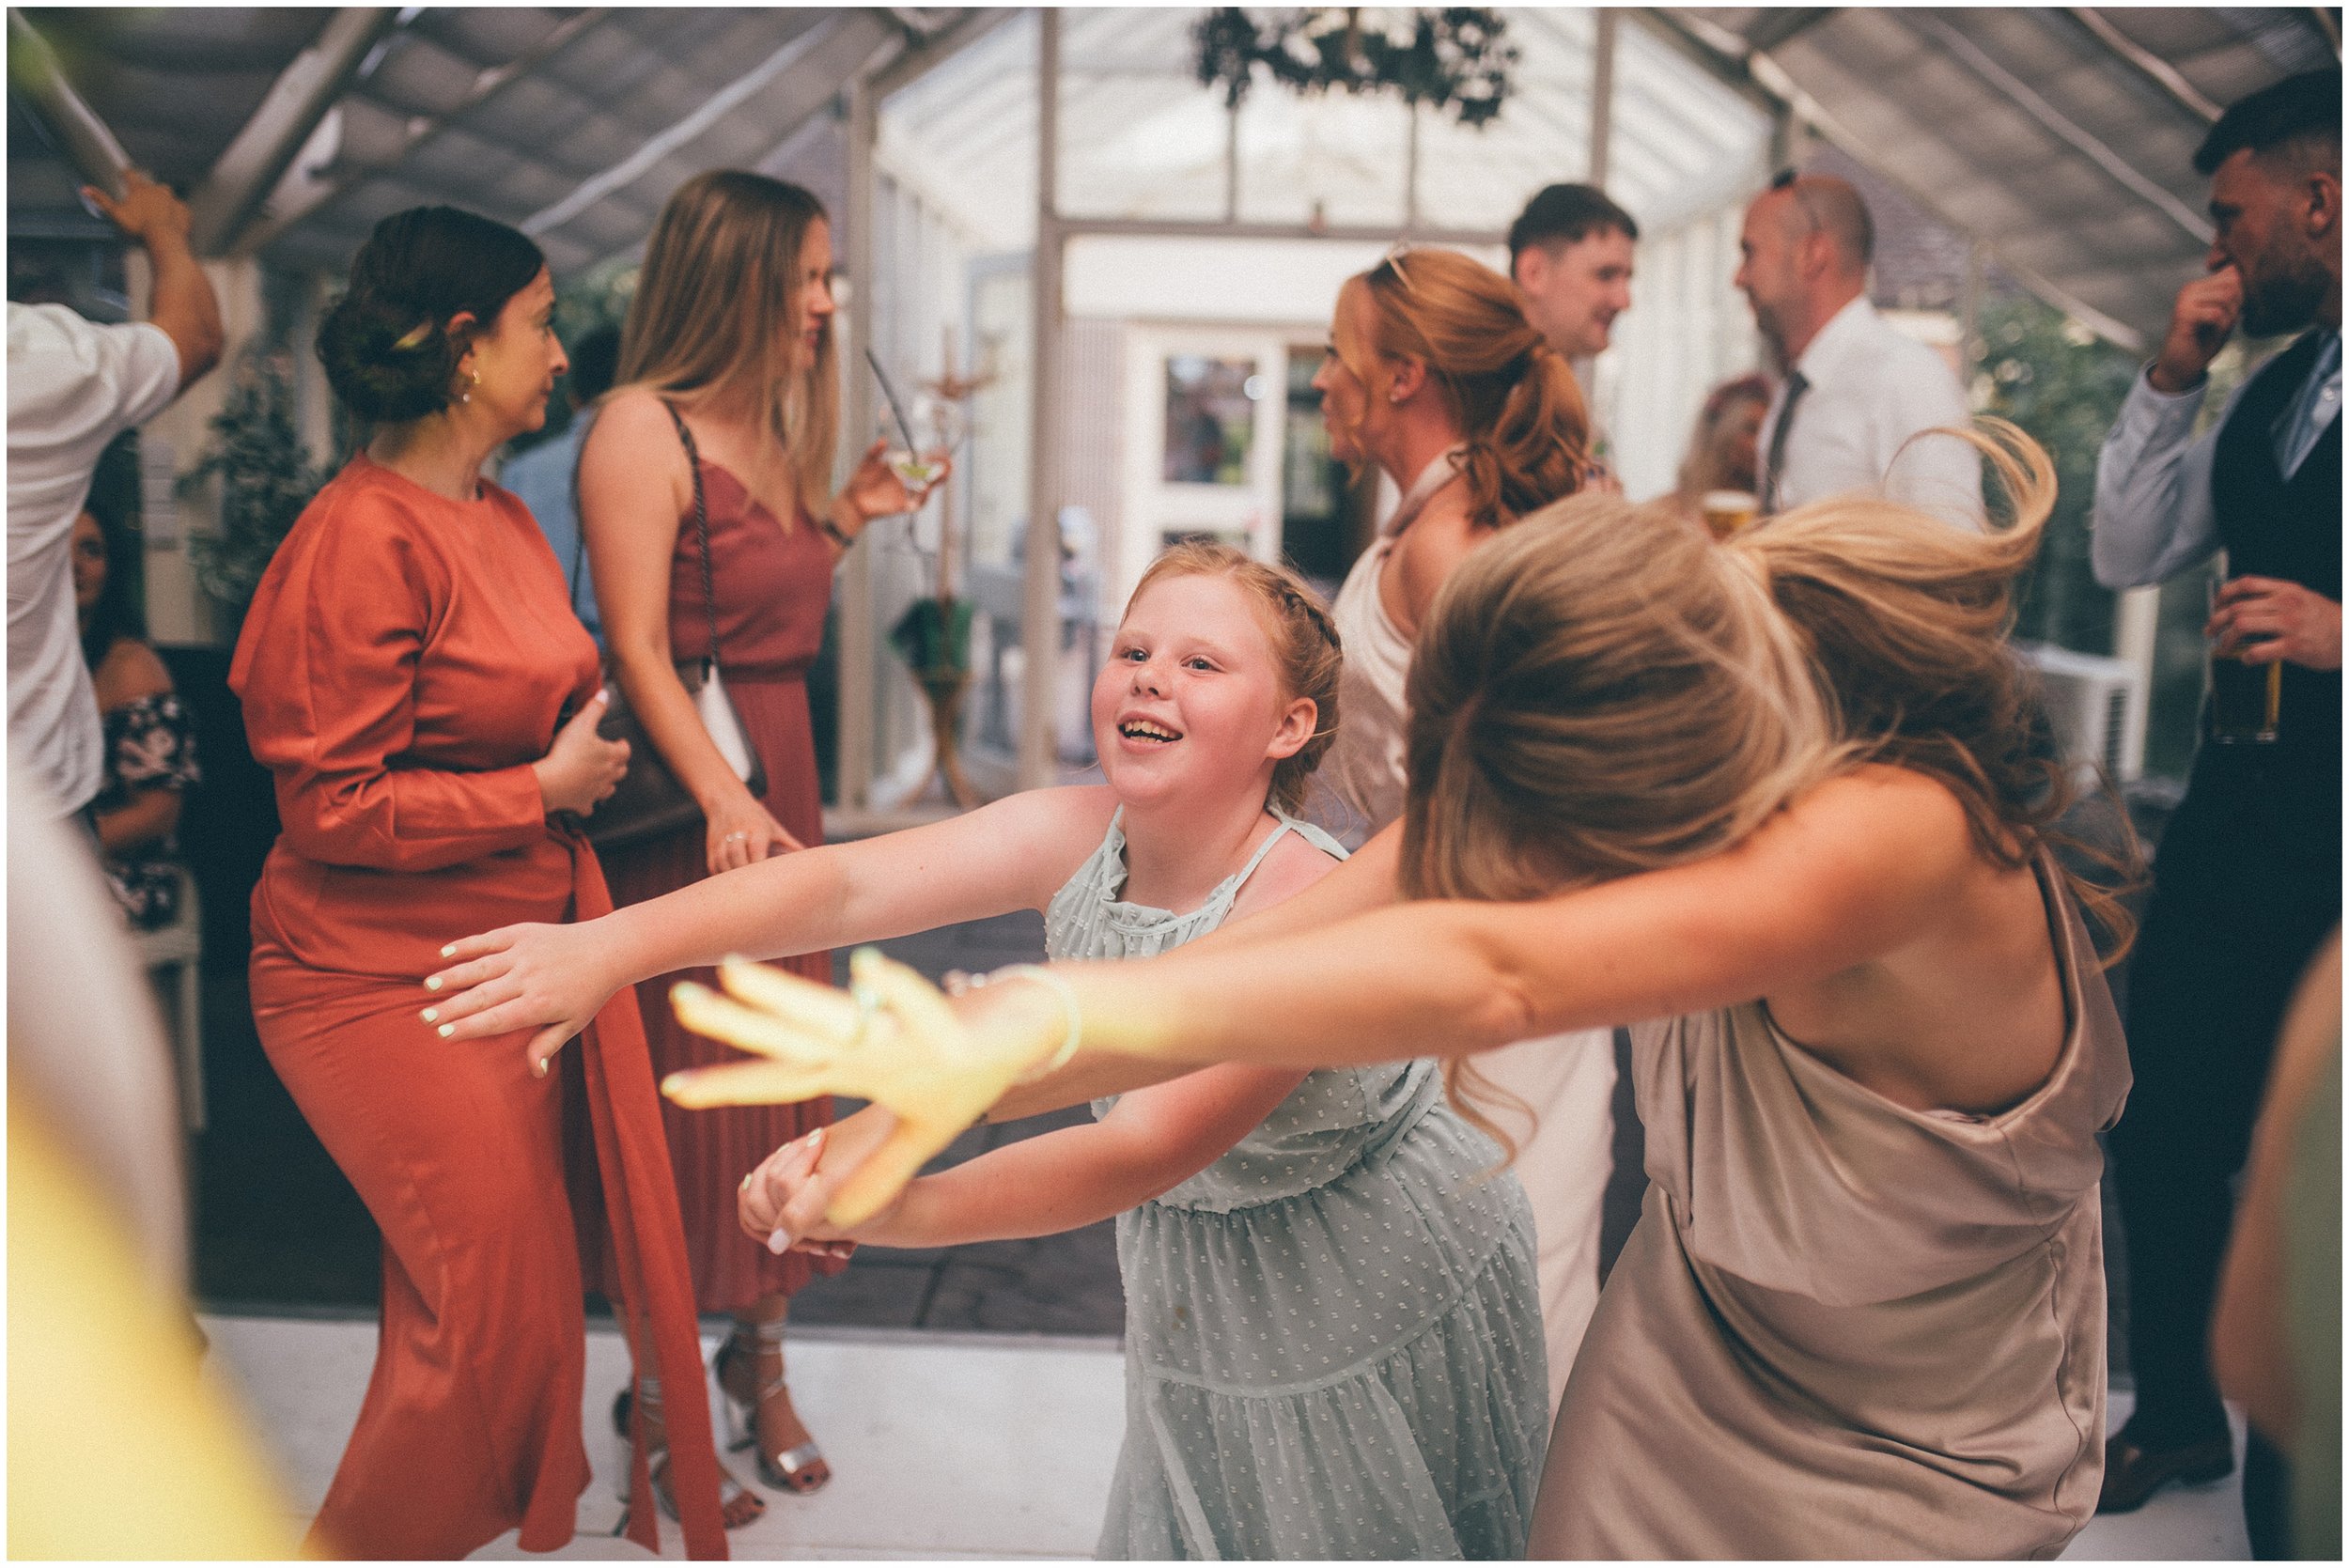 Wedding Guests enjoy the dancefloor at Abbeywood Estate wedding venue in Delamere, Cheshire.